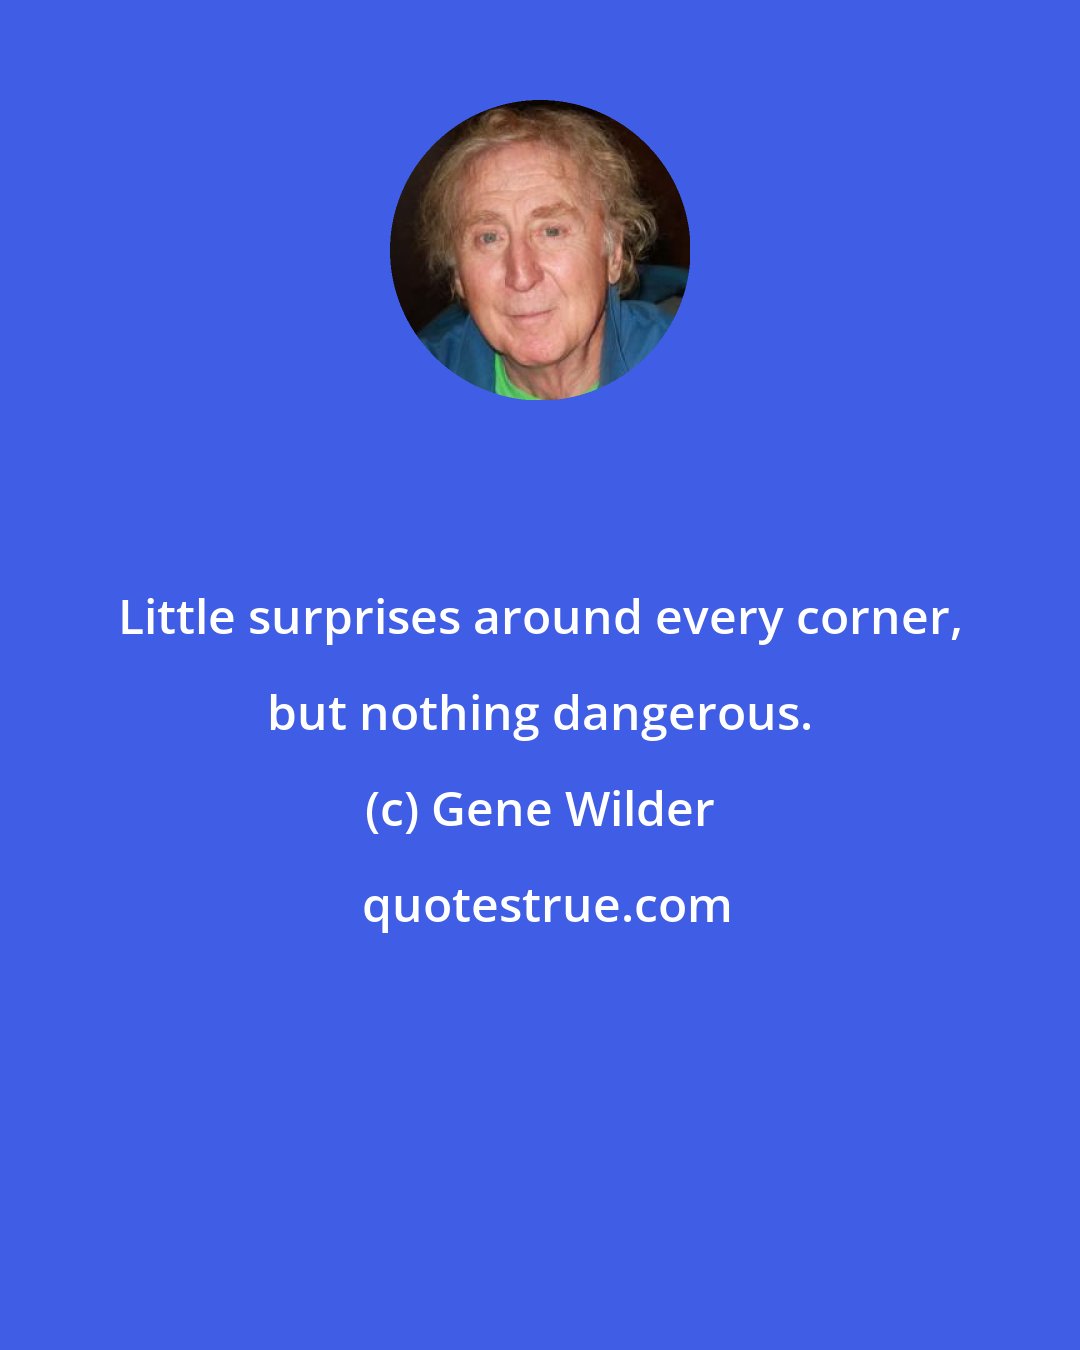 Gene Wilder: Little surprises around every corner, but nothing dangerous.